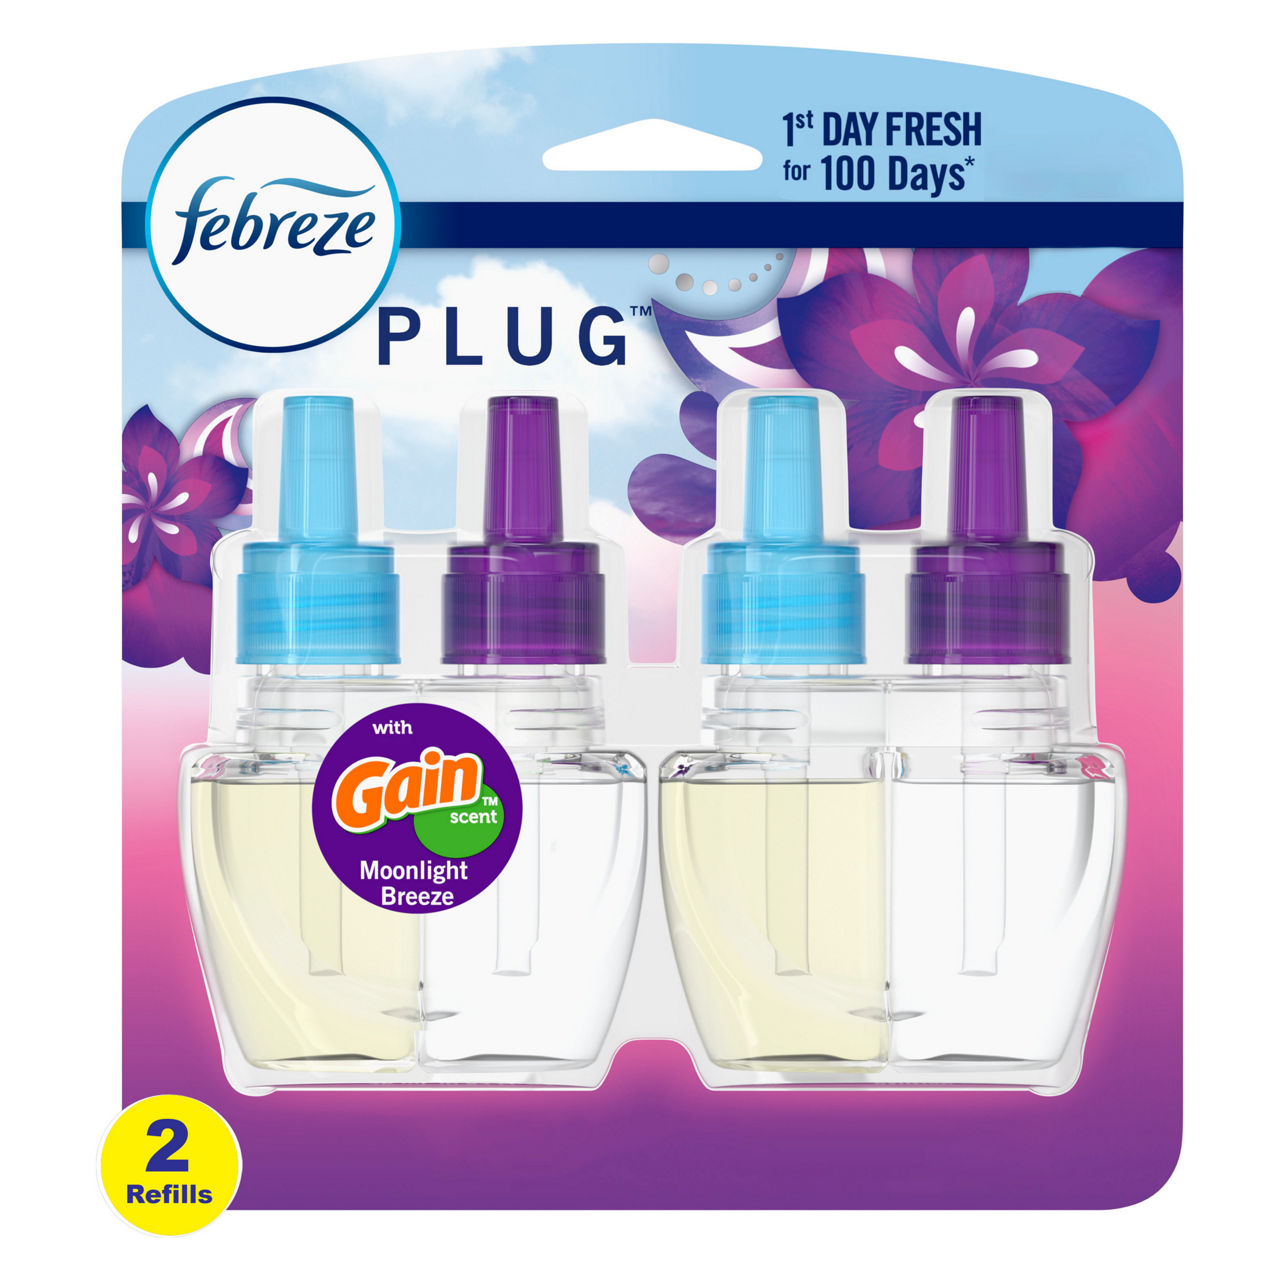 Febreze PLUG Air Freshener Refill Gain Original